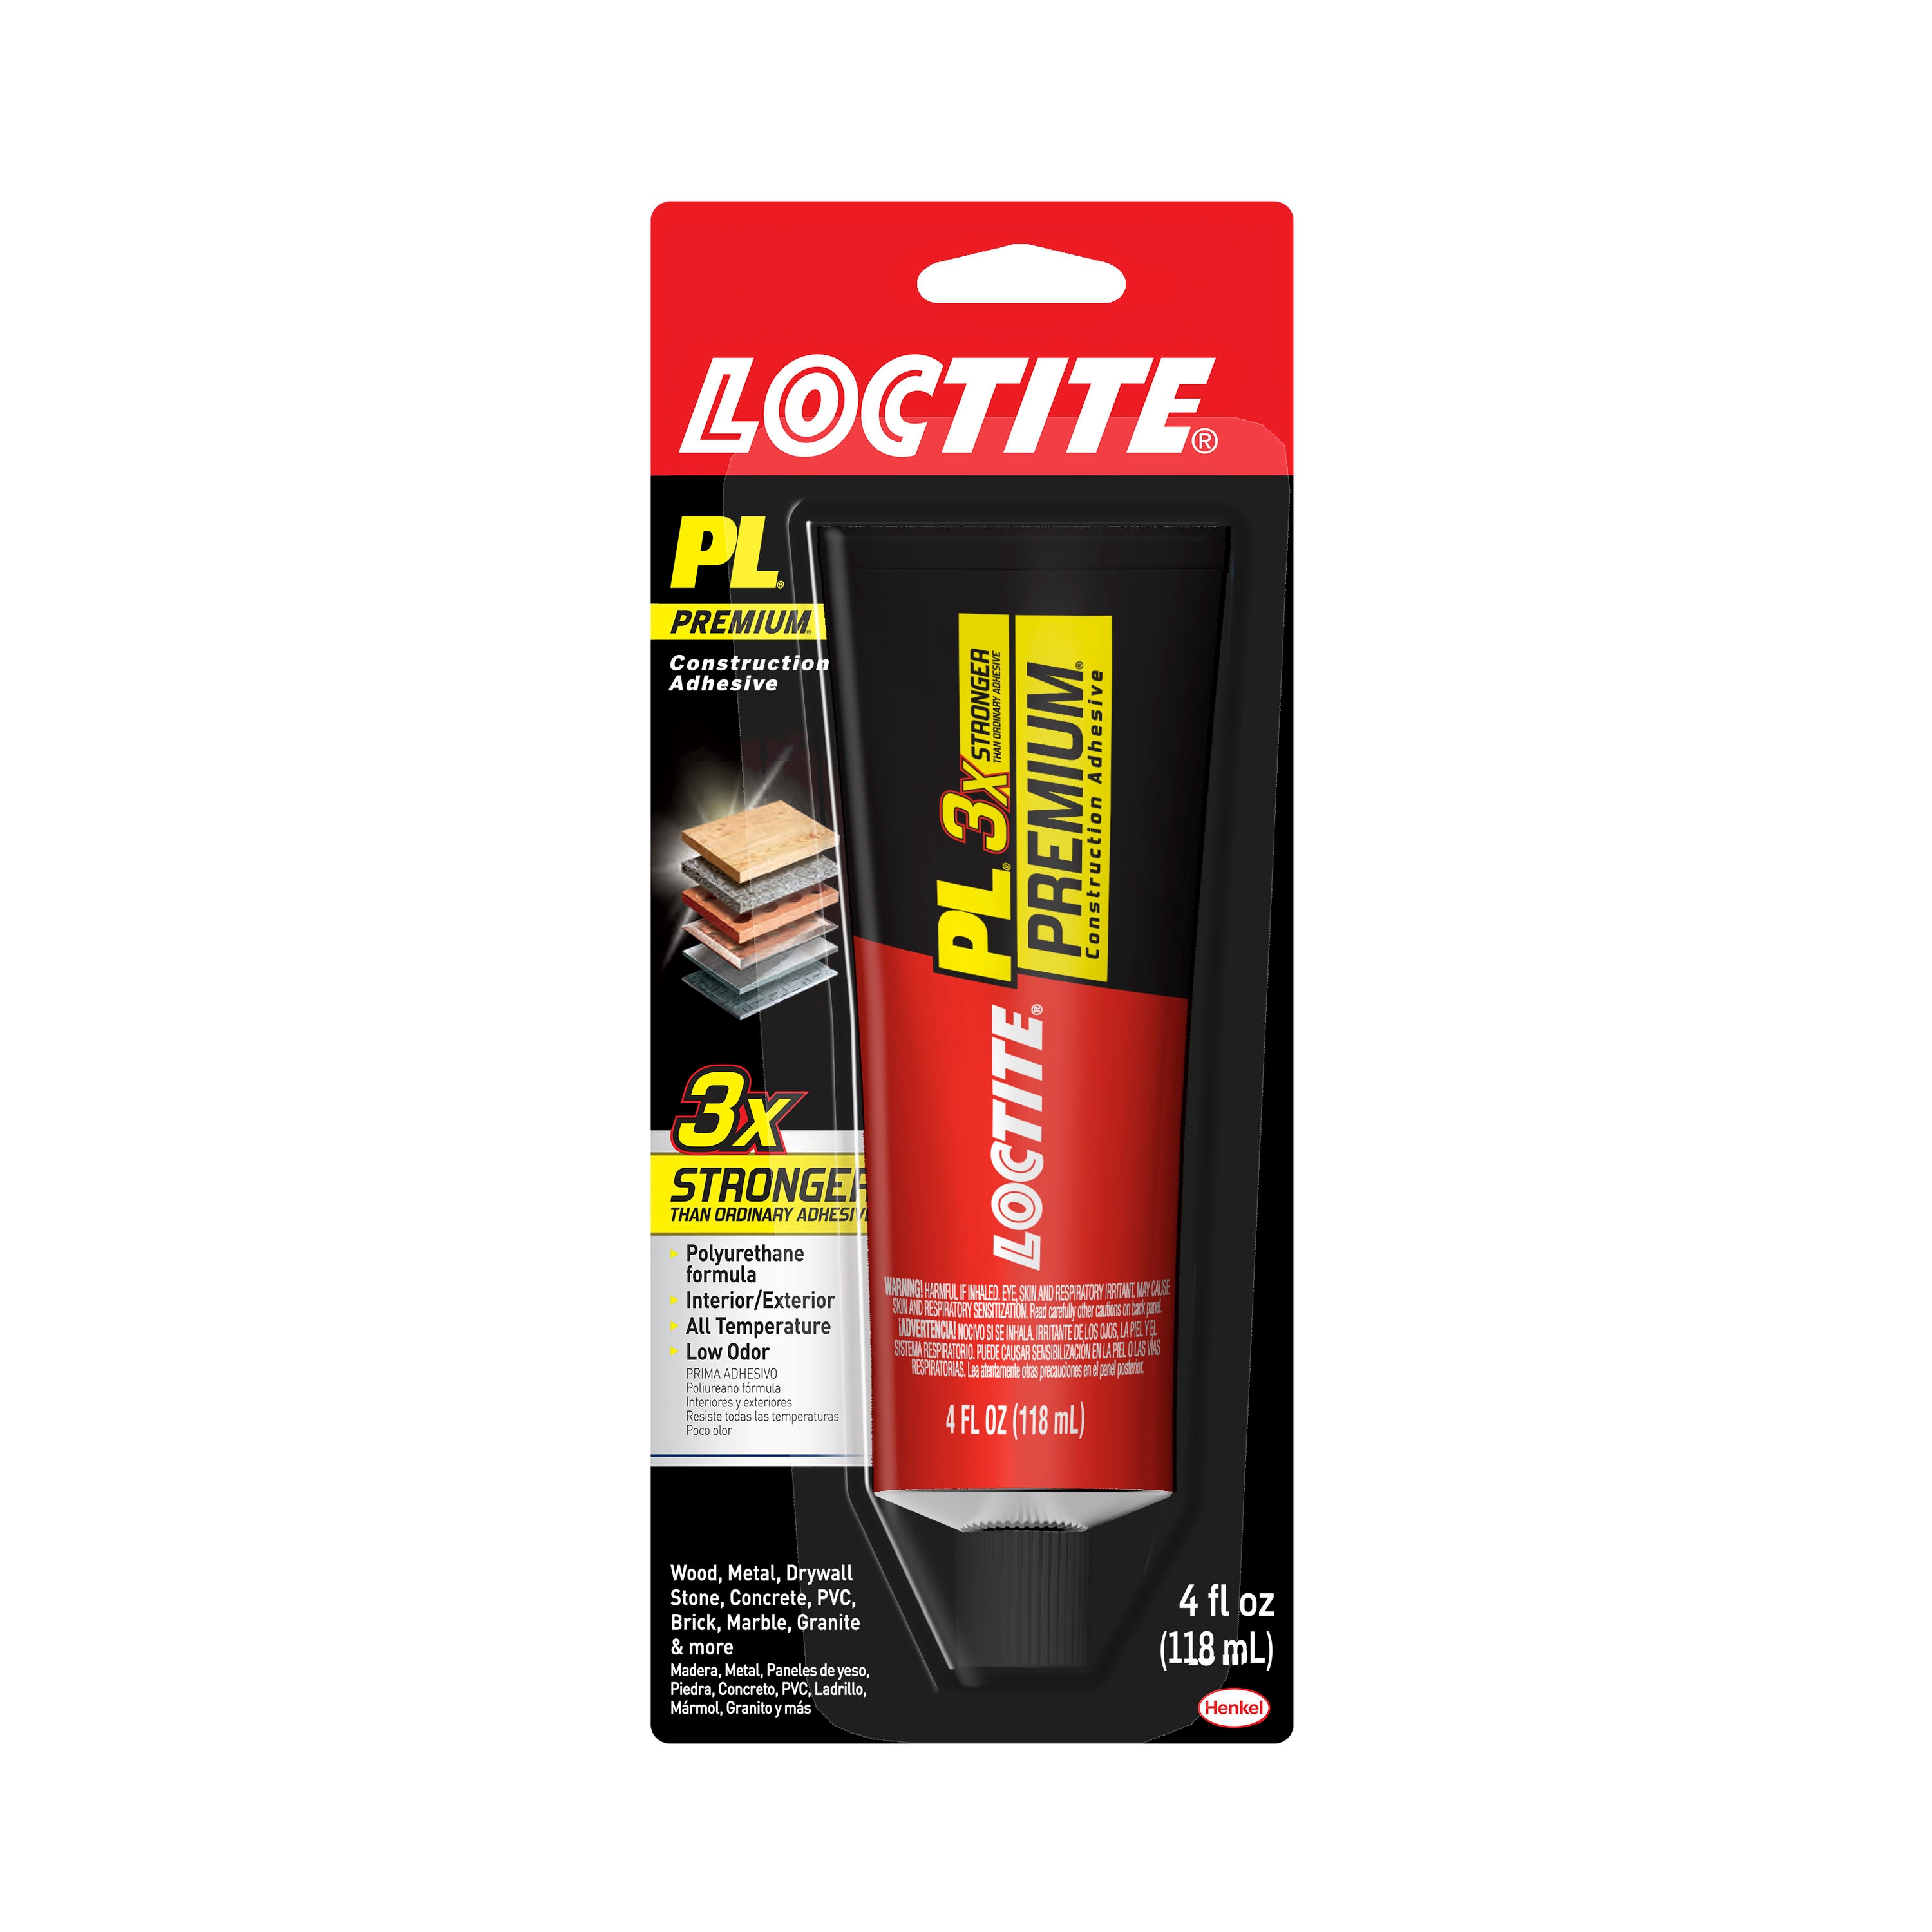 Loctite PL Premium Advanced 3X Adhesive - Barron Designs